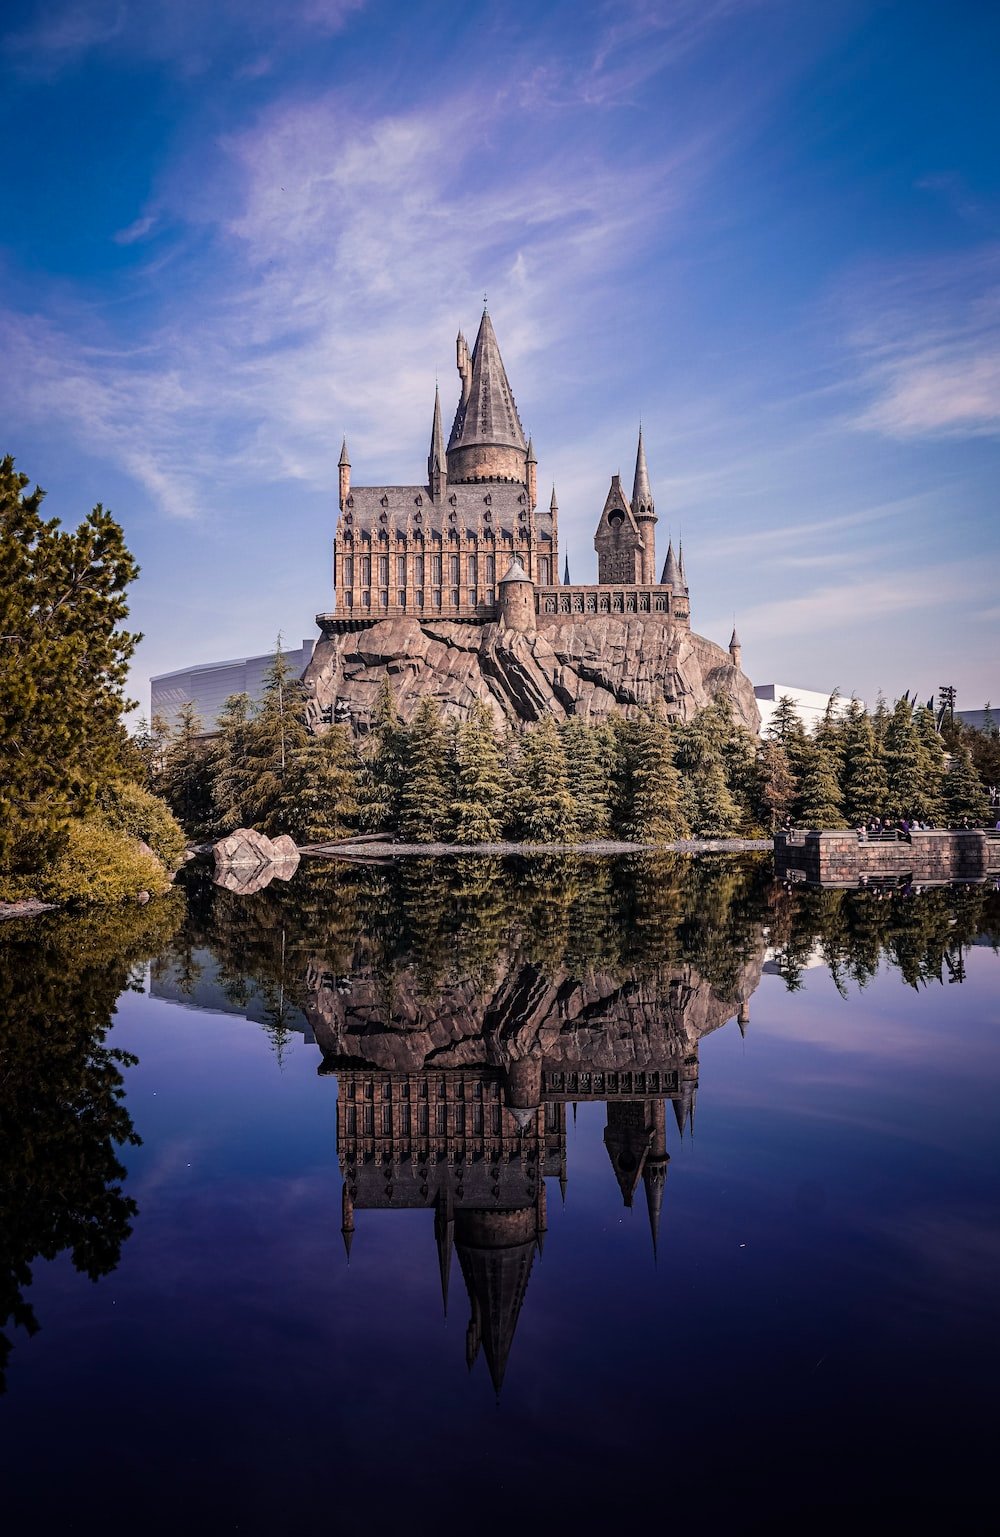 Hogwarts Castle Pictures Download Free Images on